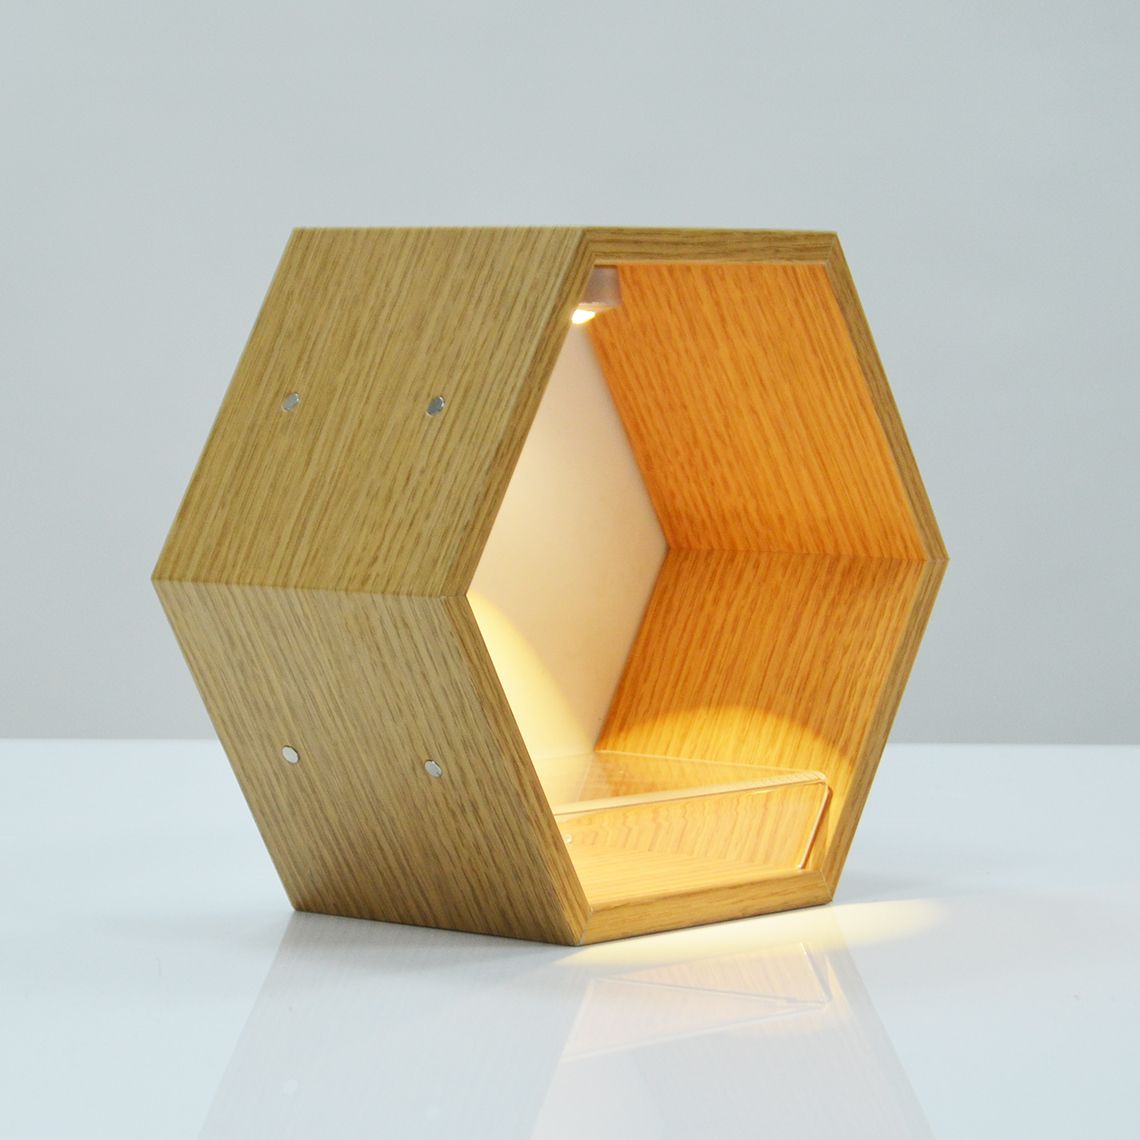 Display wooden box